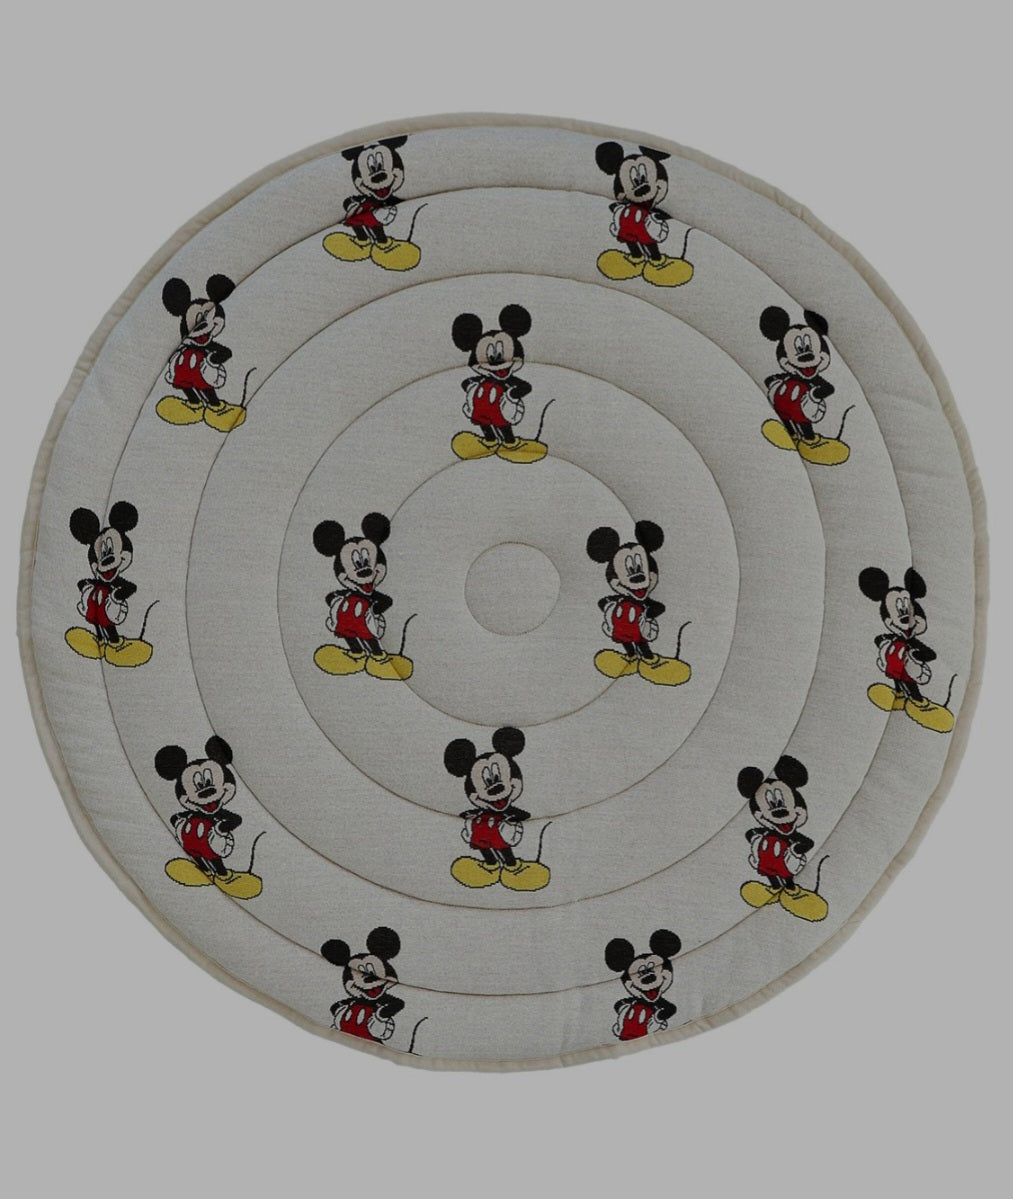 Disney Mickey Mouse Lounge Mat